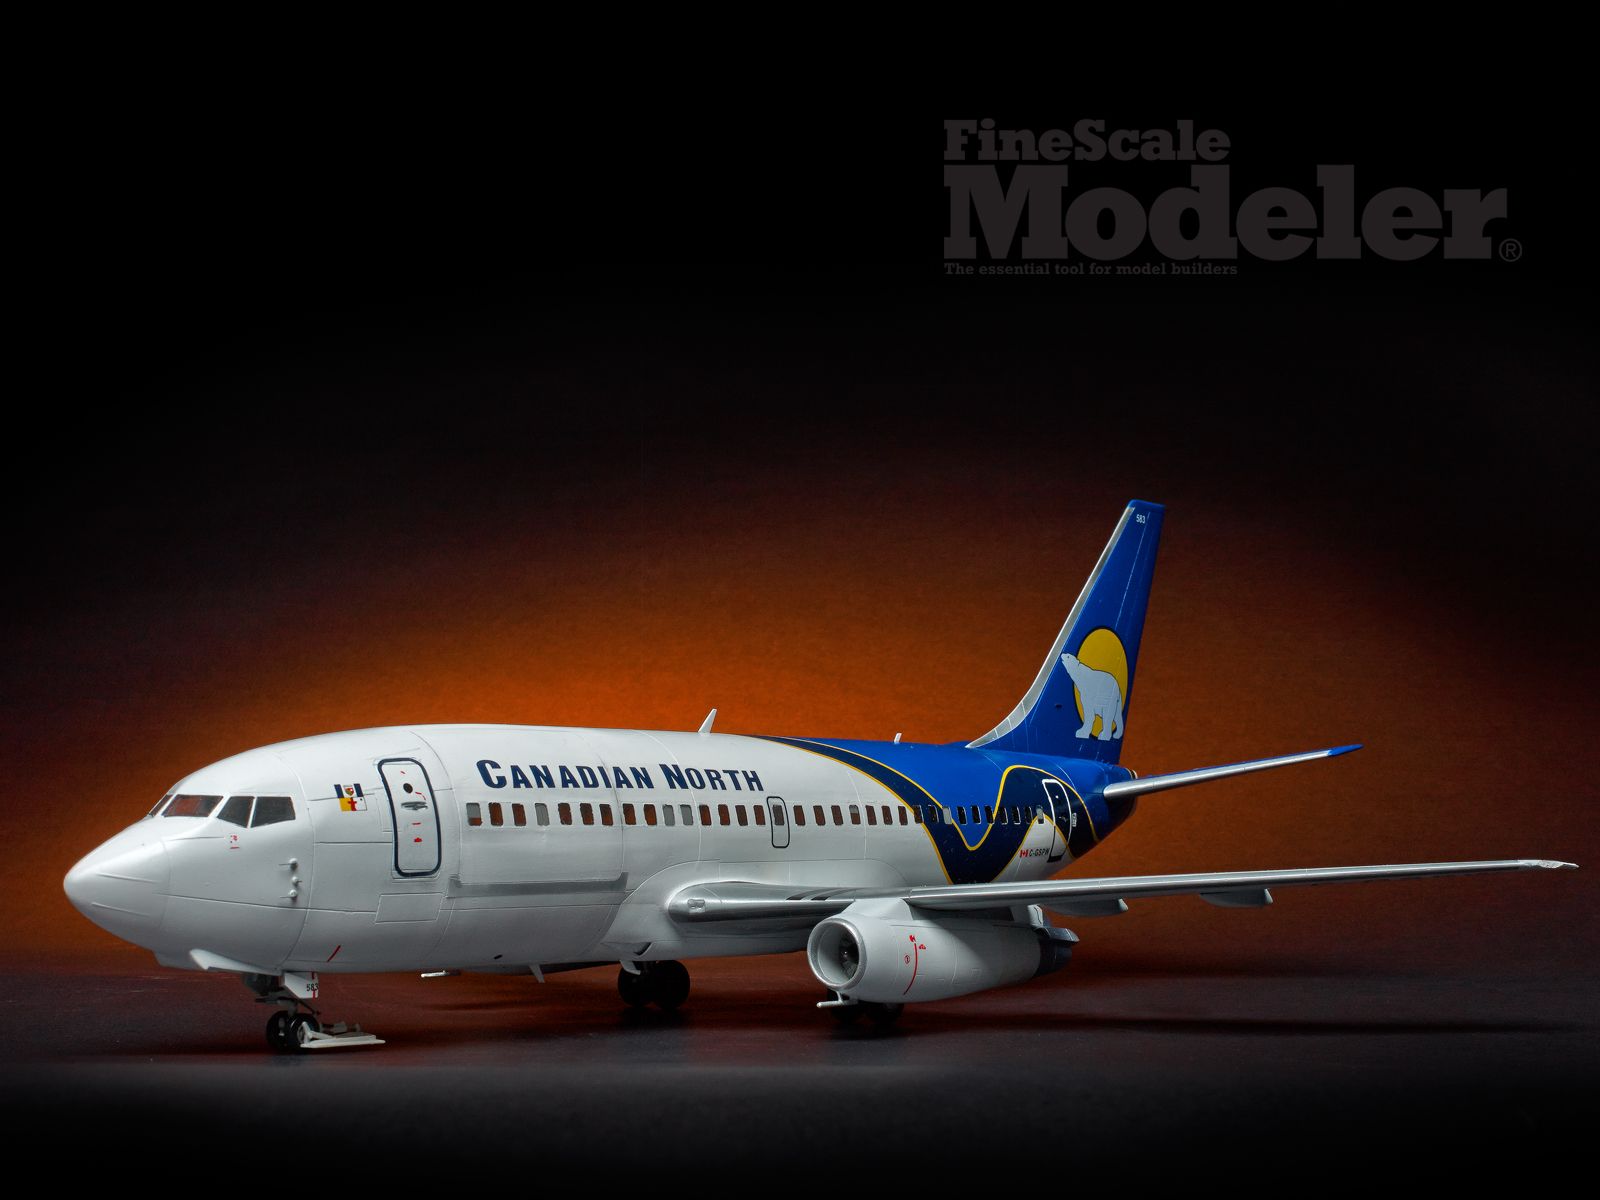 Boeing 737 200 Desktop Wallpaper. Finescale Modeler Magazine